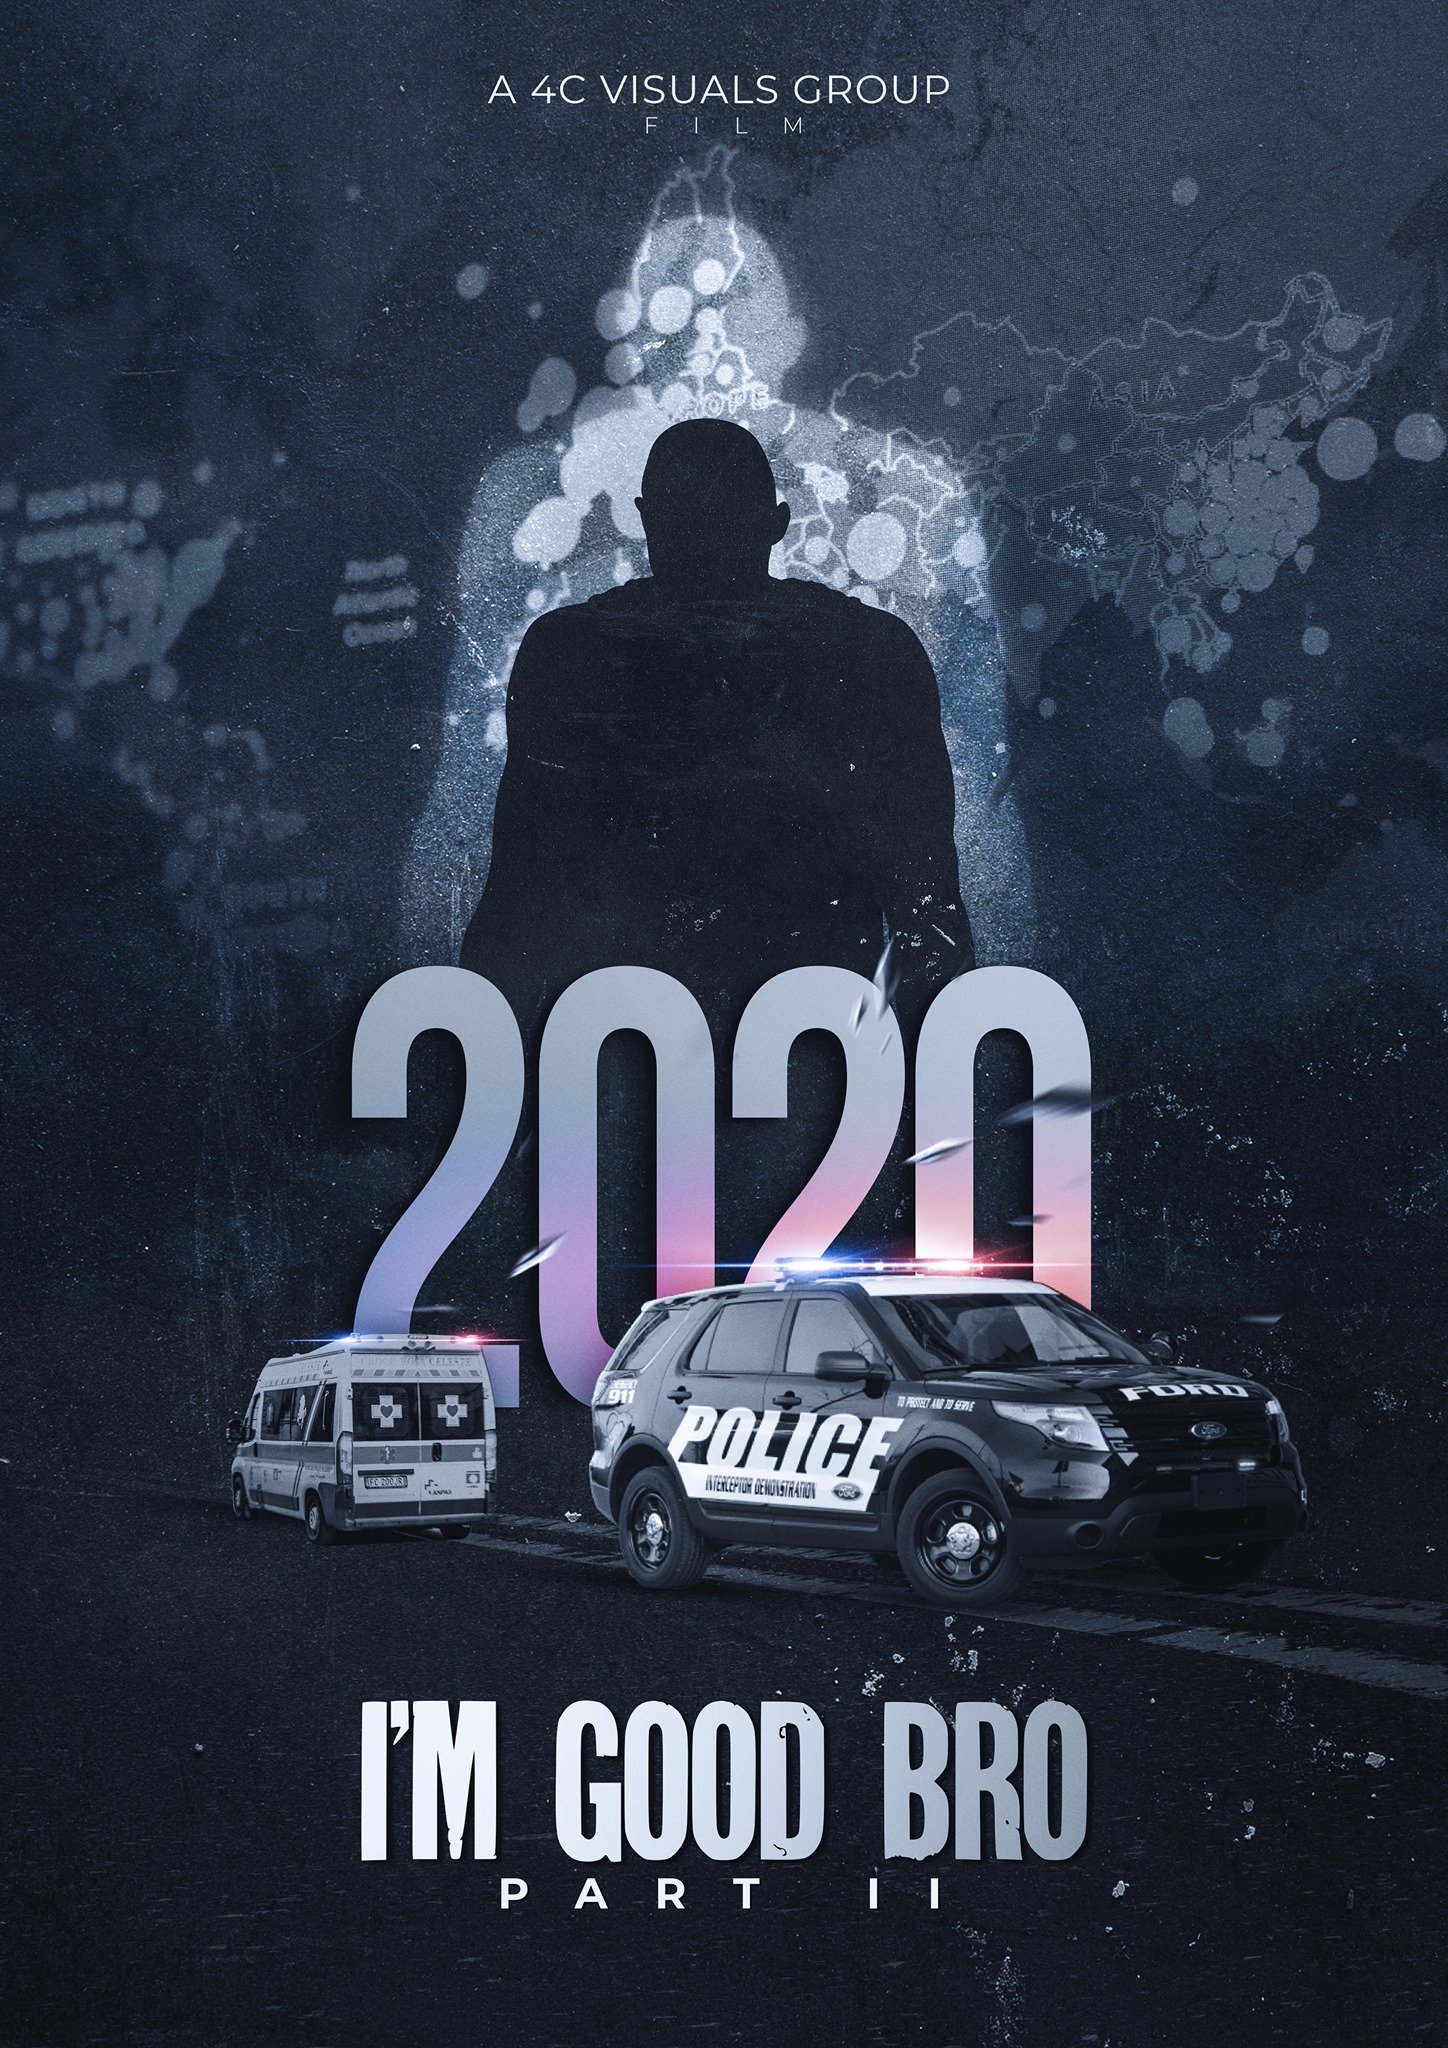 I’m Good Bro: Part II- The Year 2020